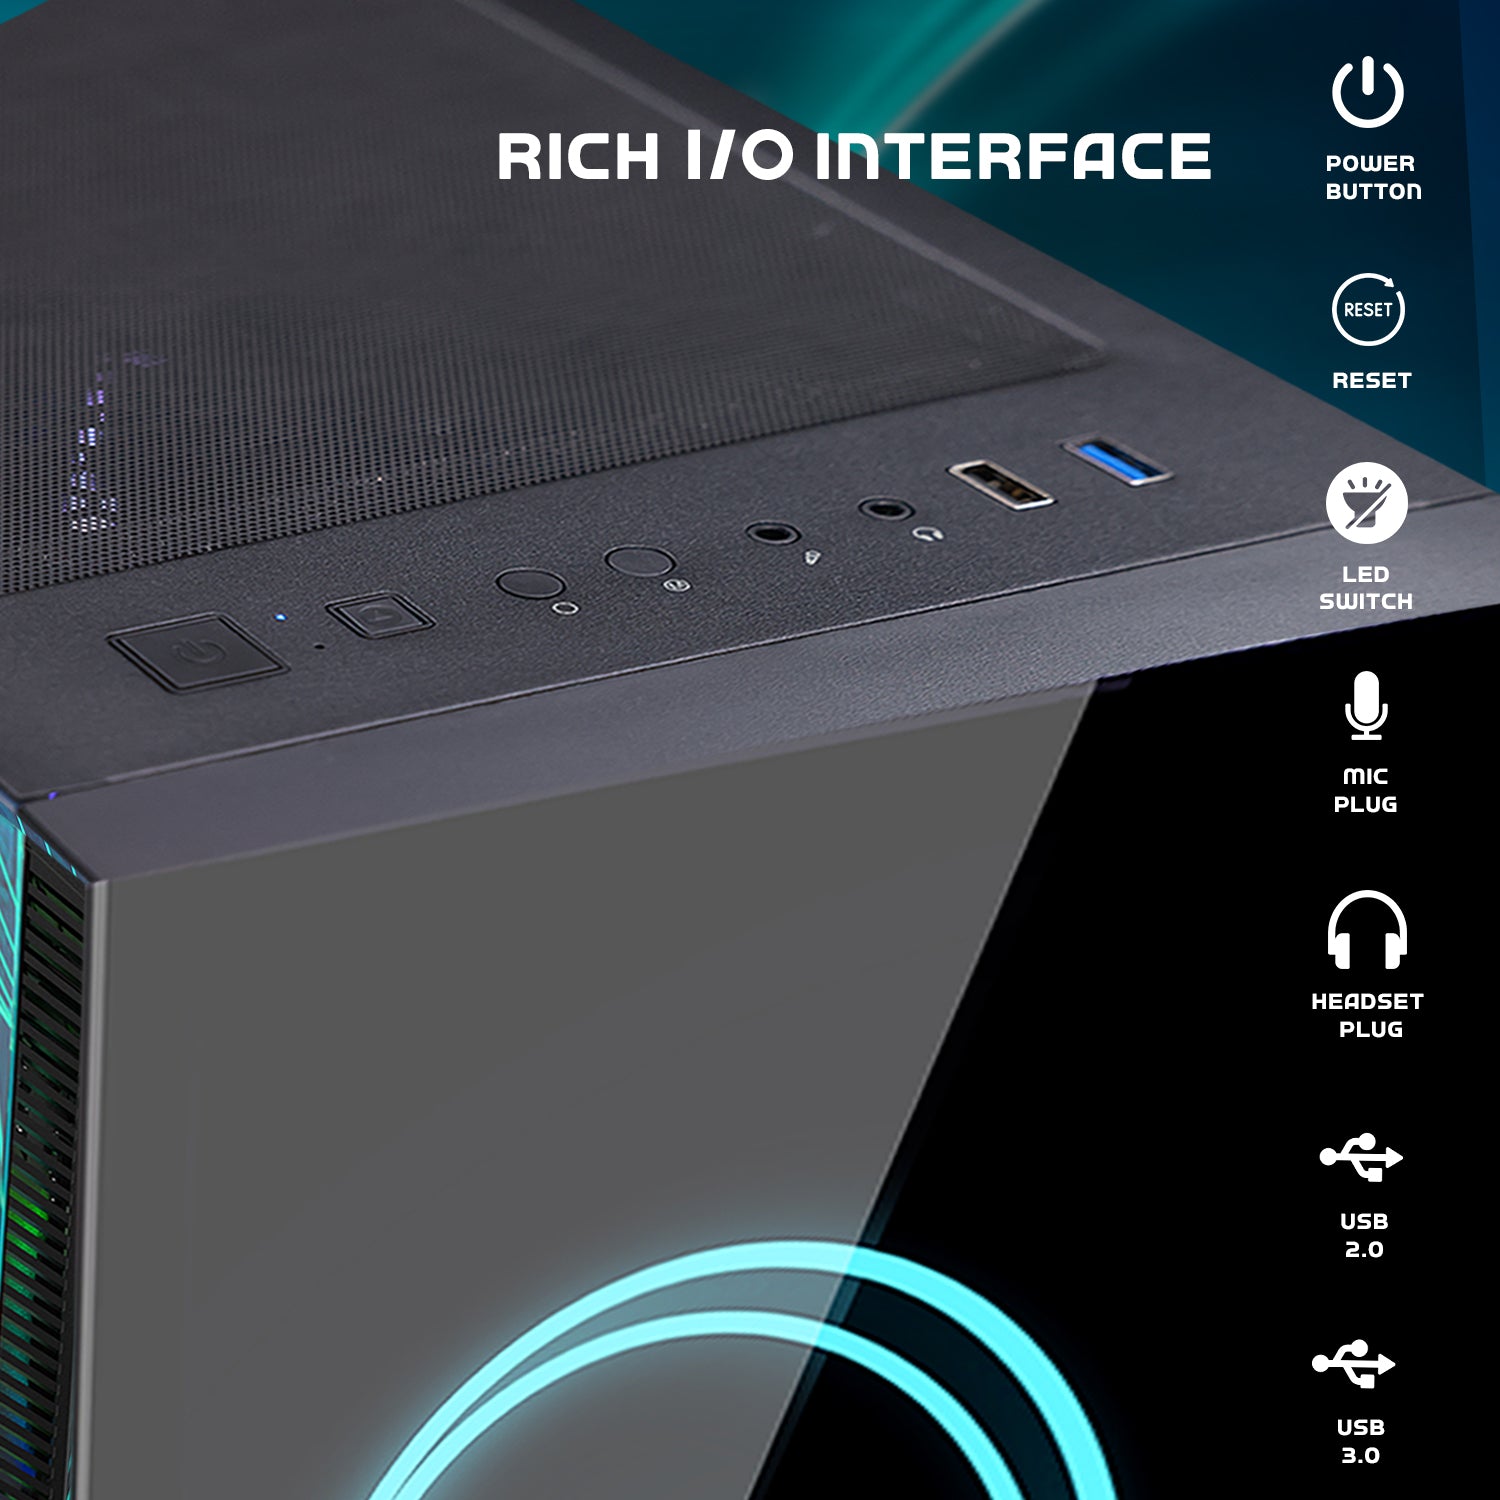 HAJAAN Gaming PC | 27” Inch Curved Gaming Monitor | Intel Core i7 Processor | GeForce RTX 3050 | Wi-Fi Ready | Windows 11 Pro